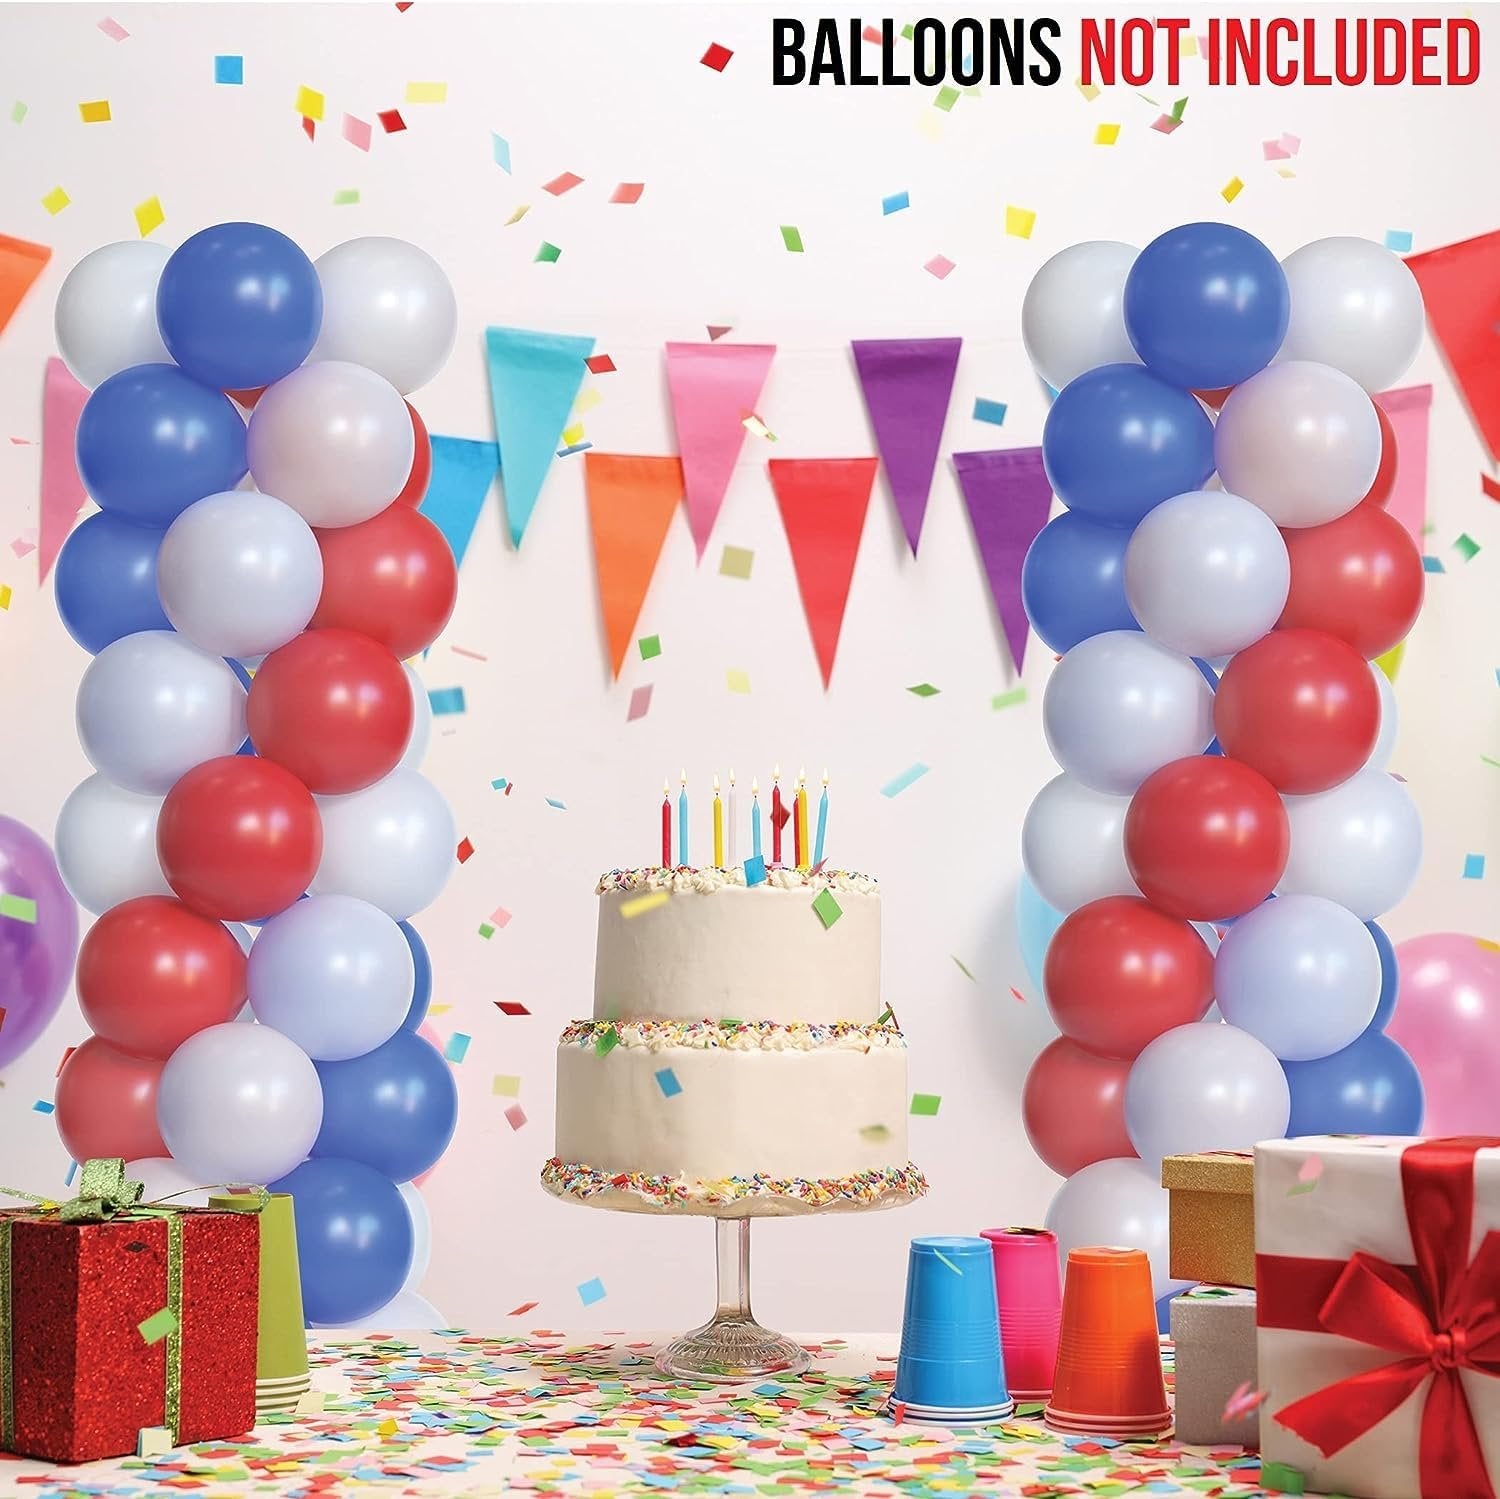 Prextex Balloon Column Kit - Set of 2 Balloon Columns, 5ft Tall | Balloon Arch Stand/Frame, Balloon Tower Holder, Balloon Column, Backdrop | Wedding, Baby Shower, Halloween, Birthday Party, Decoration